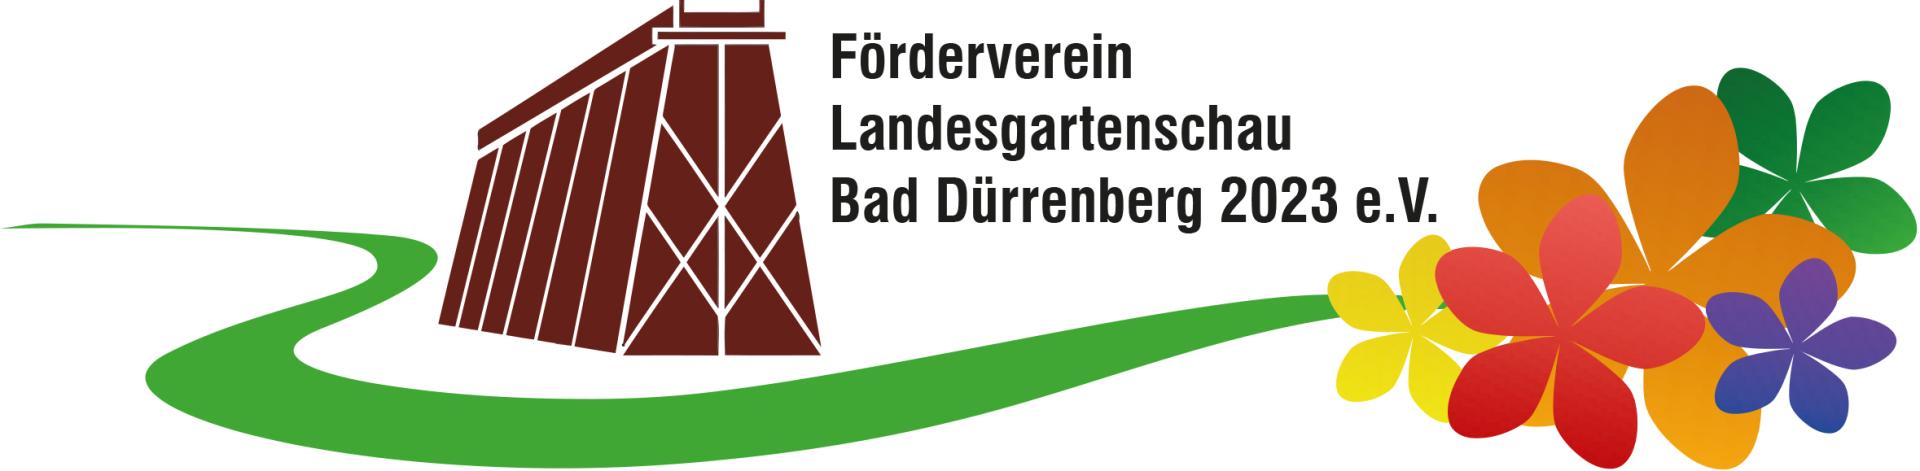 Förderverein Landesgartenschau 2023 Bad Dürrenberg e.V.